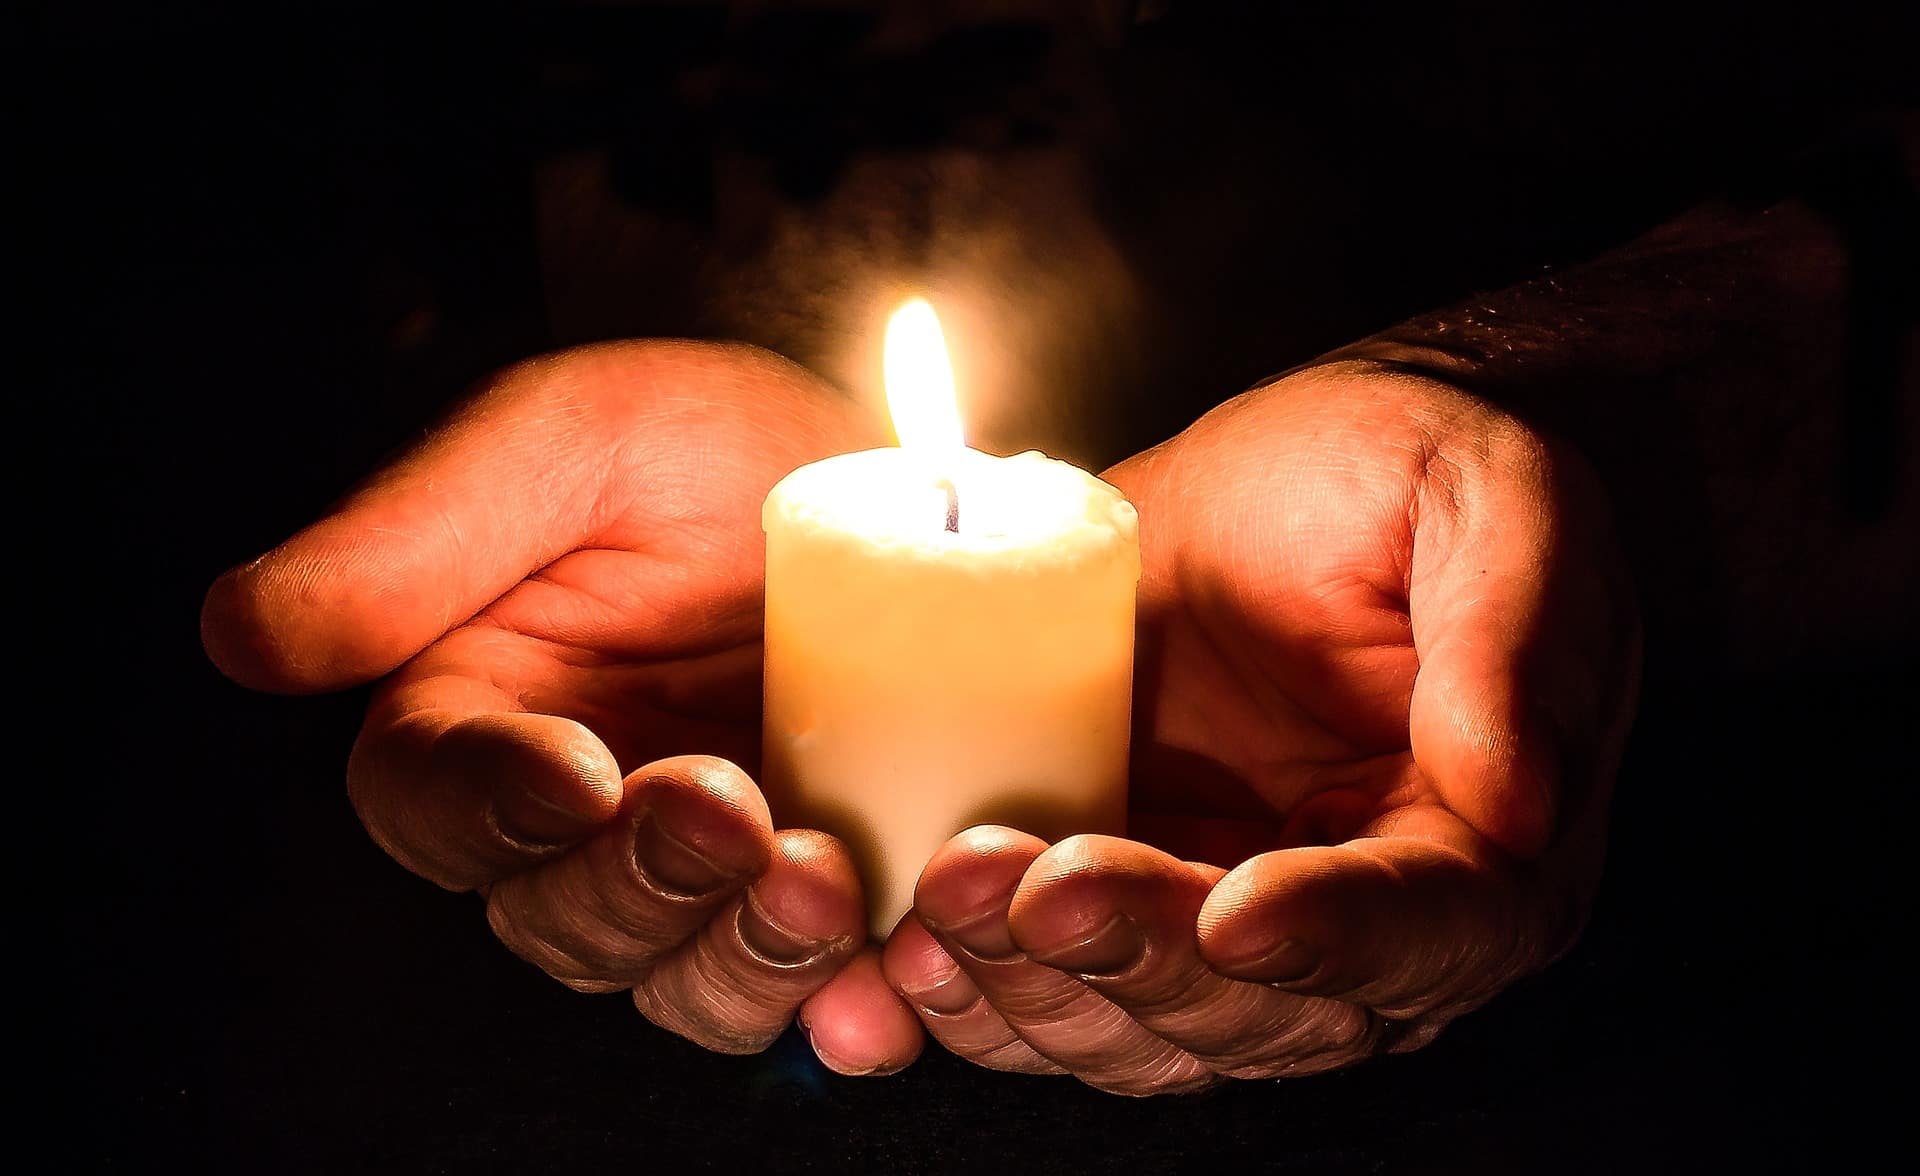 holding a burning candle